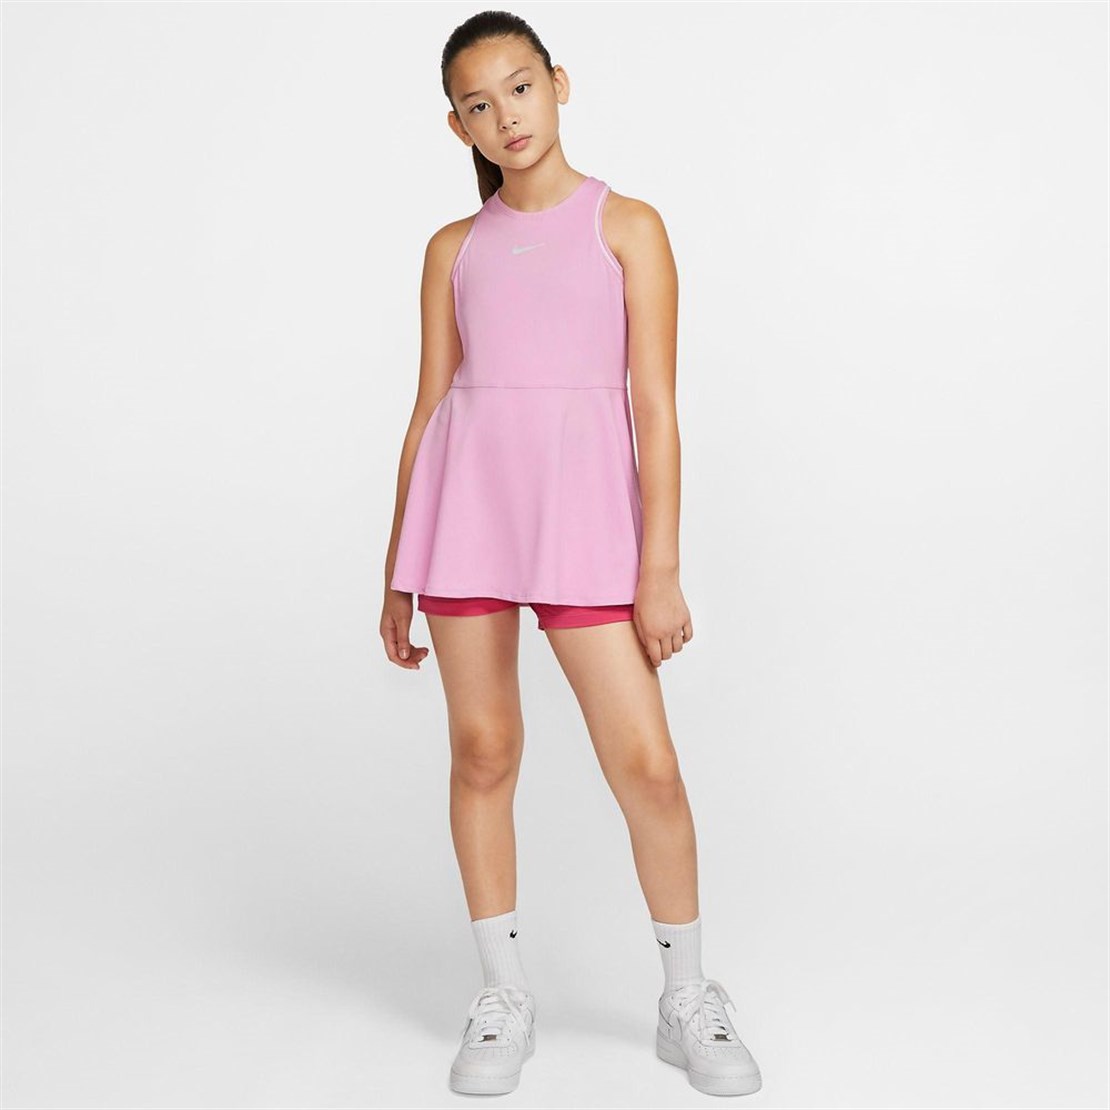 Nike Dri-Fit Kız Çocuk Tenis Elbisesi | Pembe | Meritspor